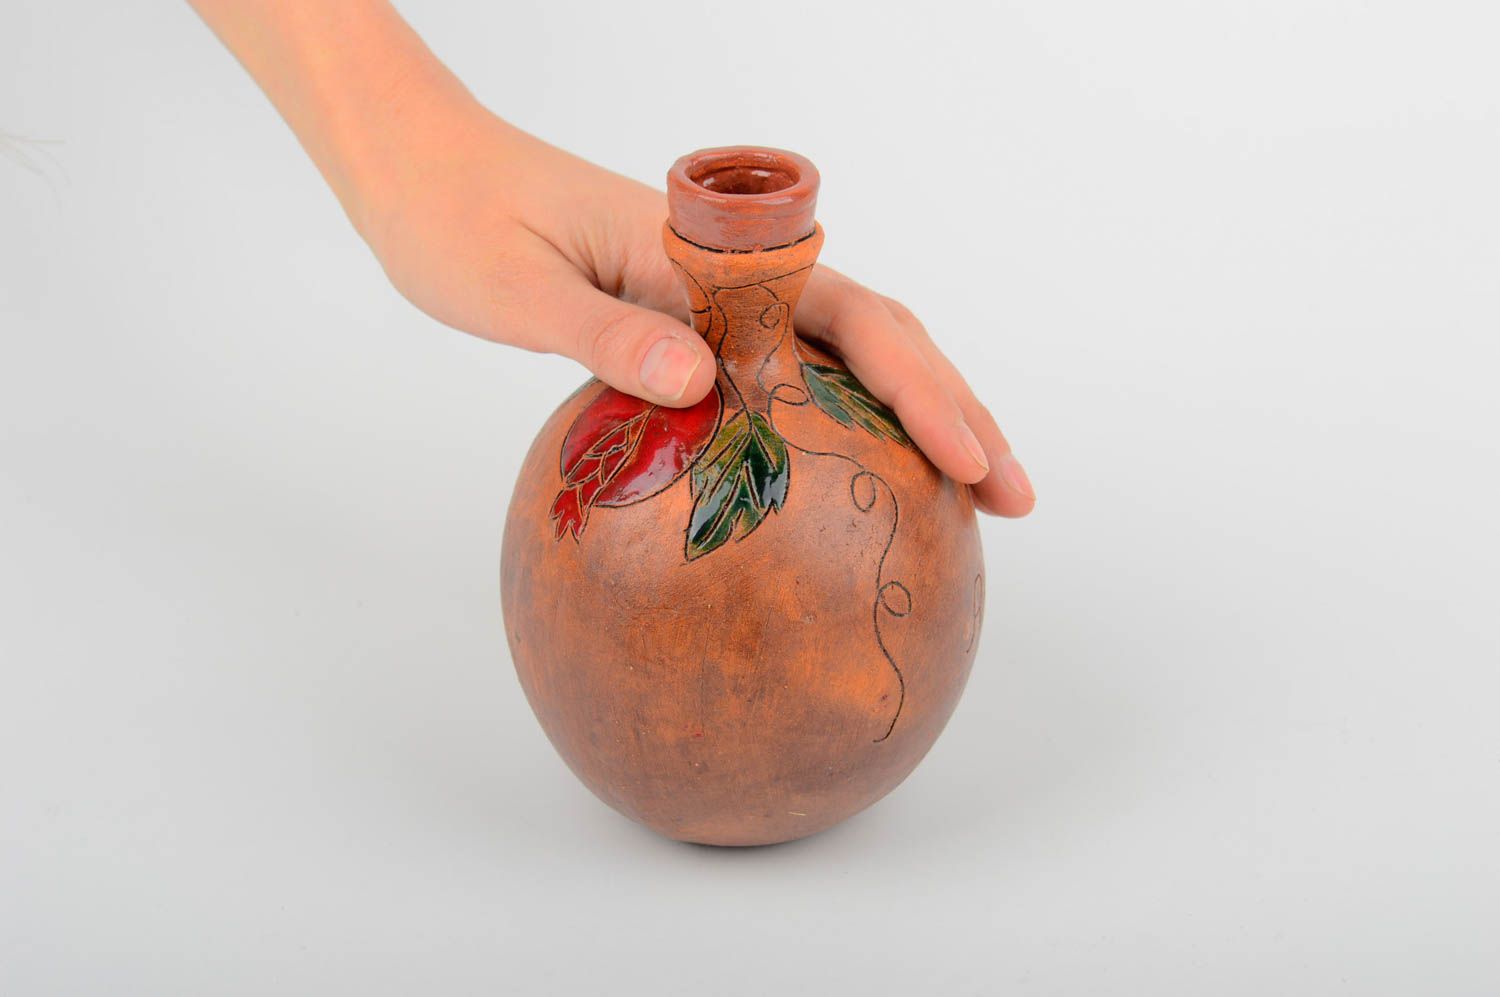 15 oz ceramic wine pitcher in ball shape 0,67 lb photo 2